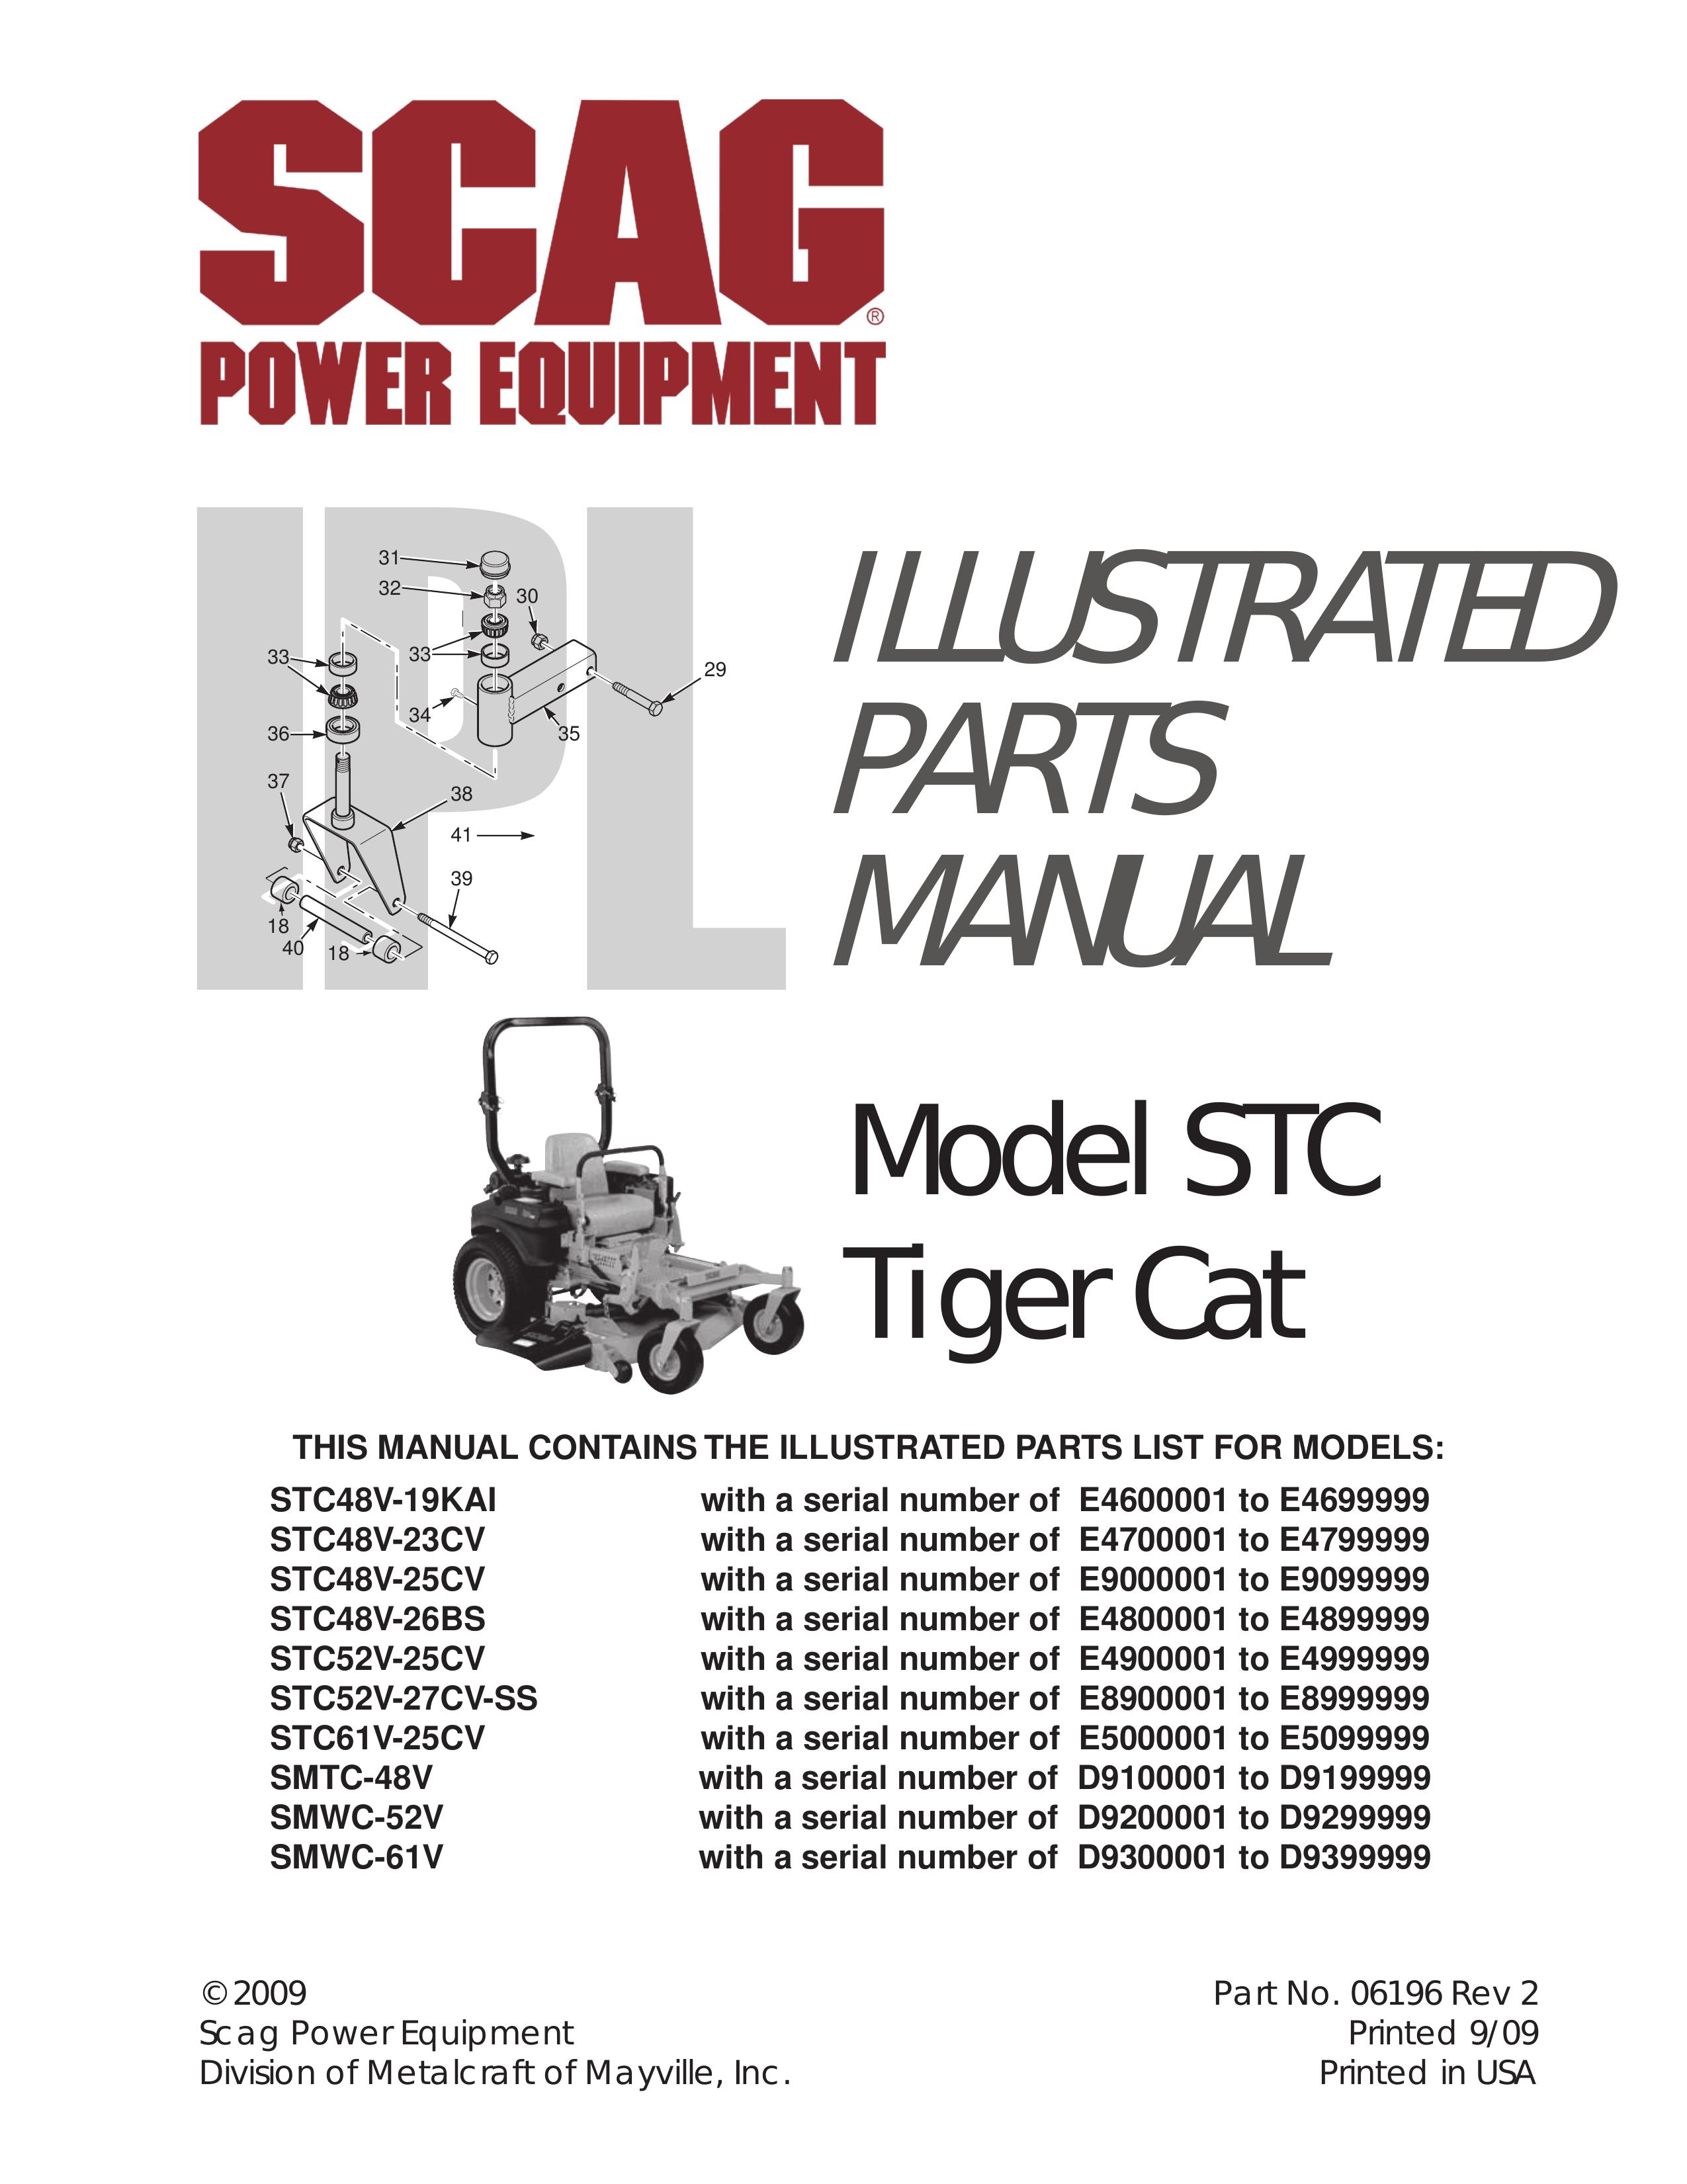 Scag Power Equipment SMWC-61V Lawn Mower User Manual